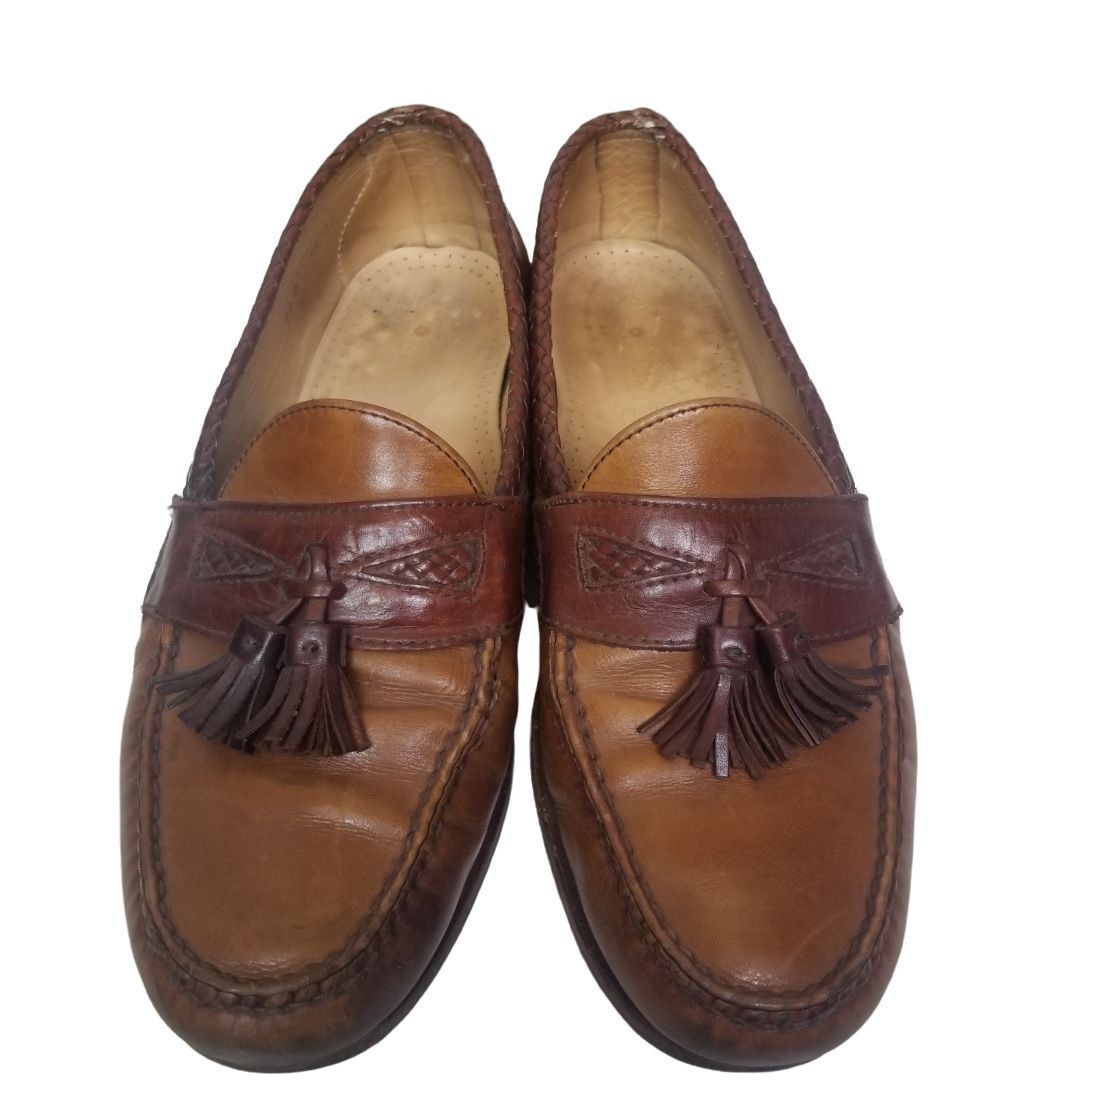 Allen Edmonds Allen Edmonds Leather Closed Toe Slip On Maxfield Loafers Size US 12 / EU 45 - 2 Preview